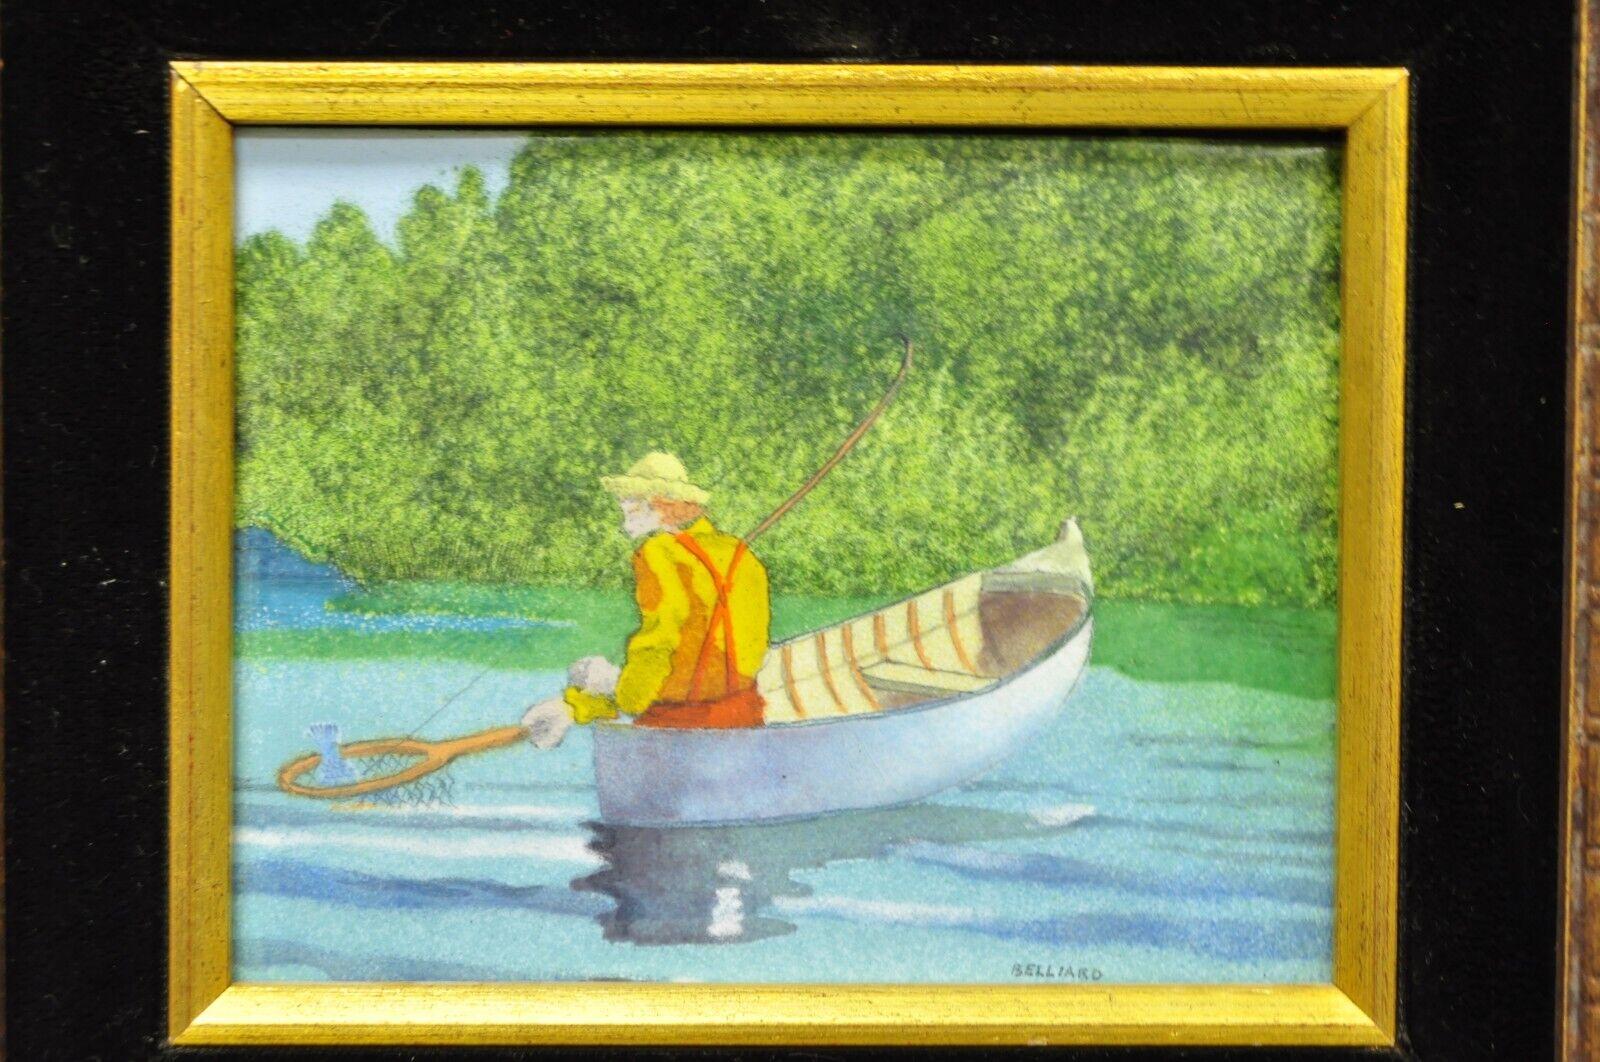 Modern Daniel Belliard Enamel on Copper Small Framed Painting Fisherman in Boat on Lake For Sale